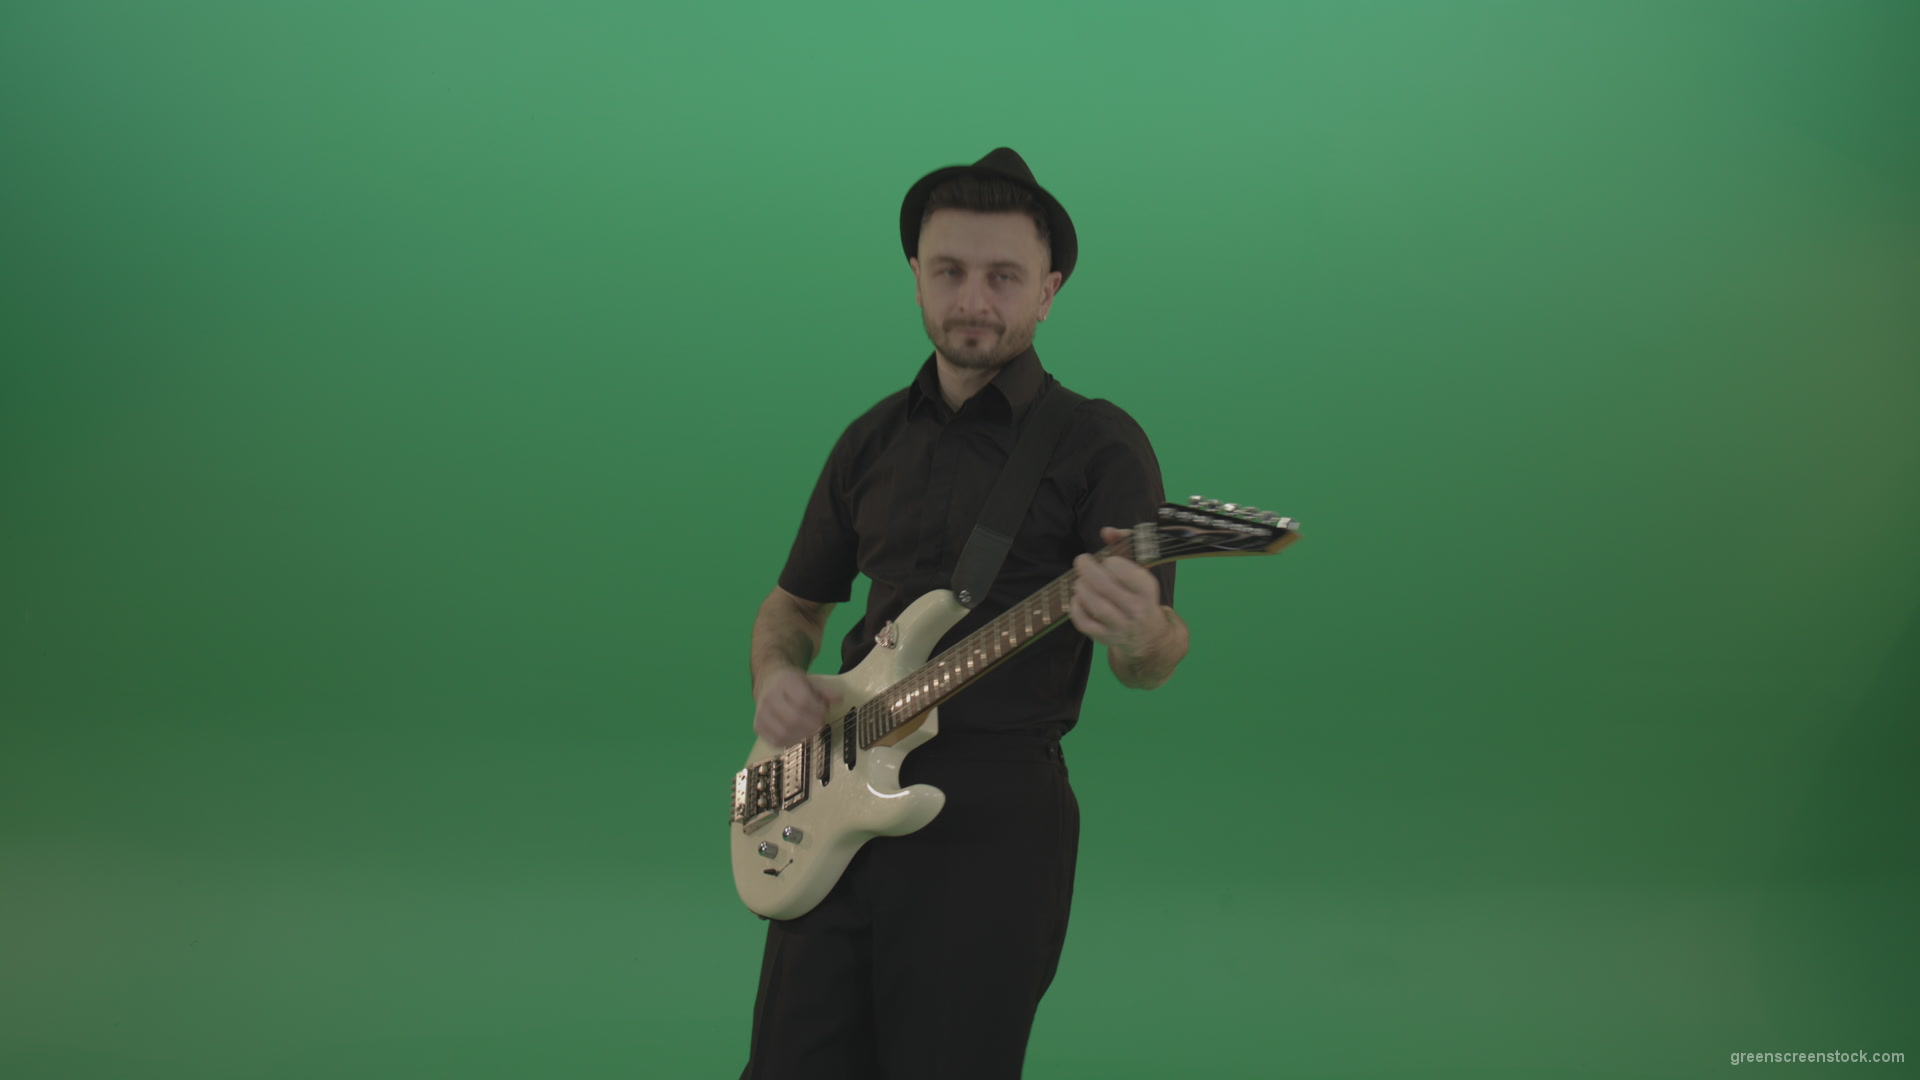 Man-in-black-playing-white-guitar-on-green-screen-1_009 Green Screen Stock